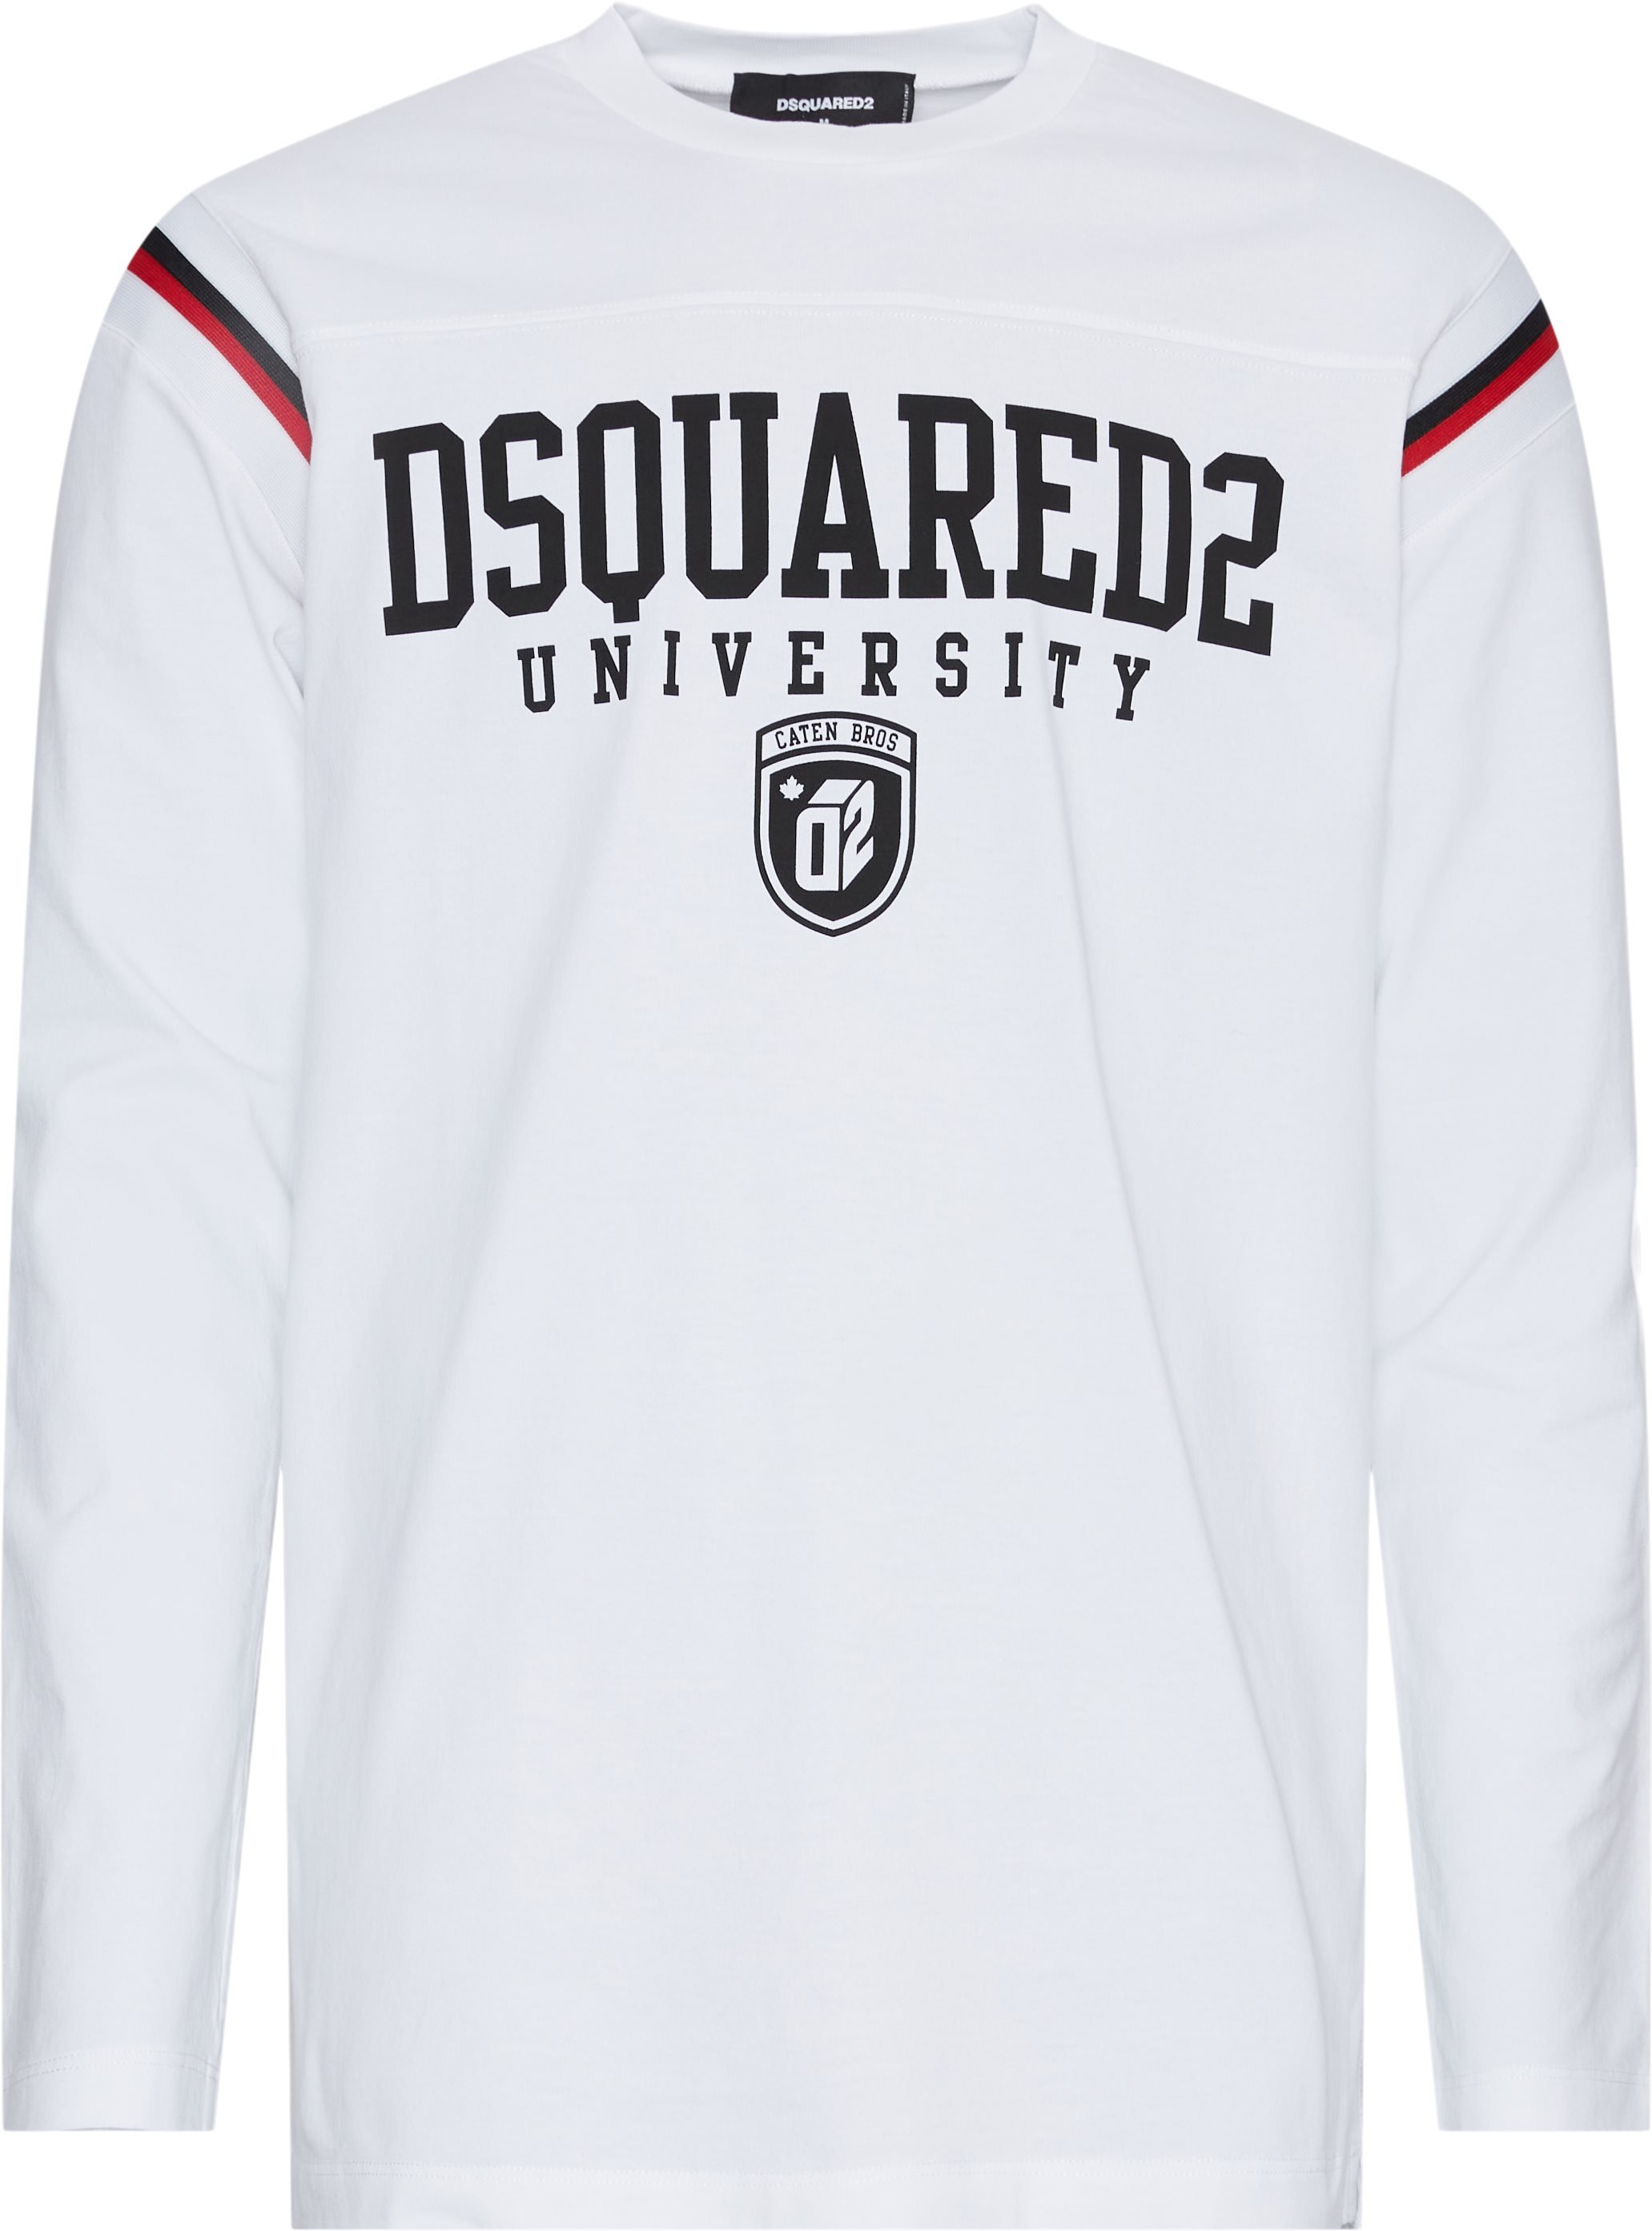 Dsquared2 Sweatshirts S74GD1218 S24658 White